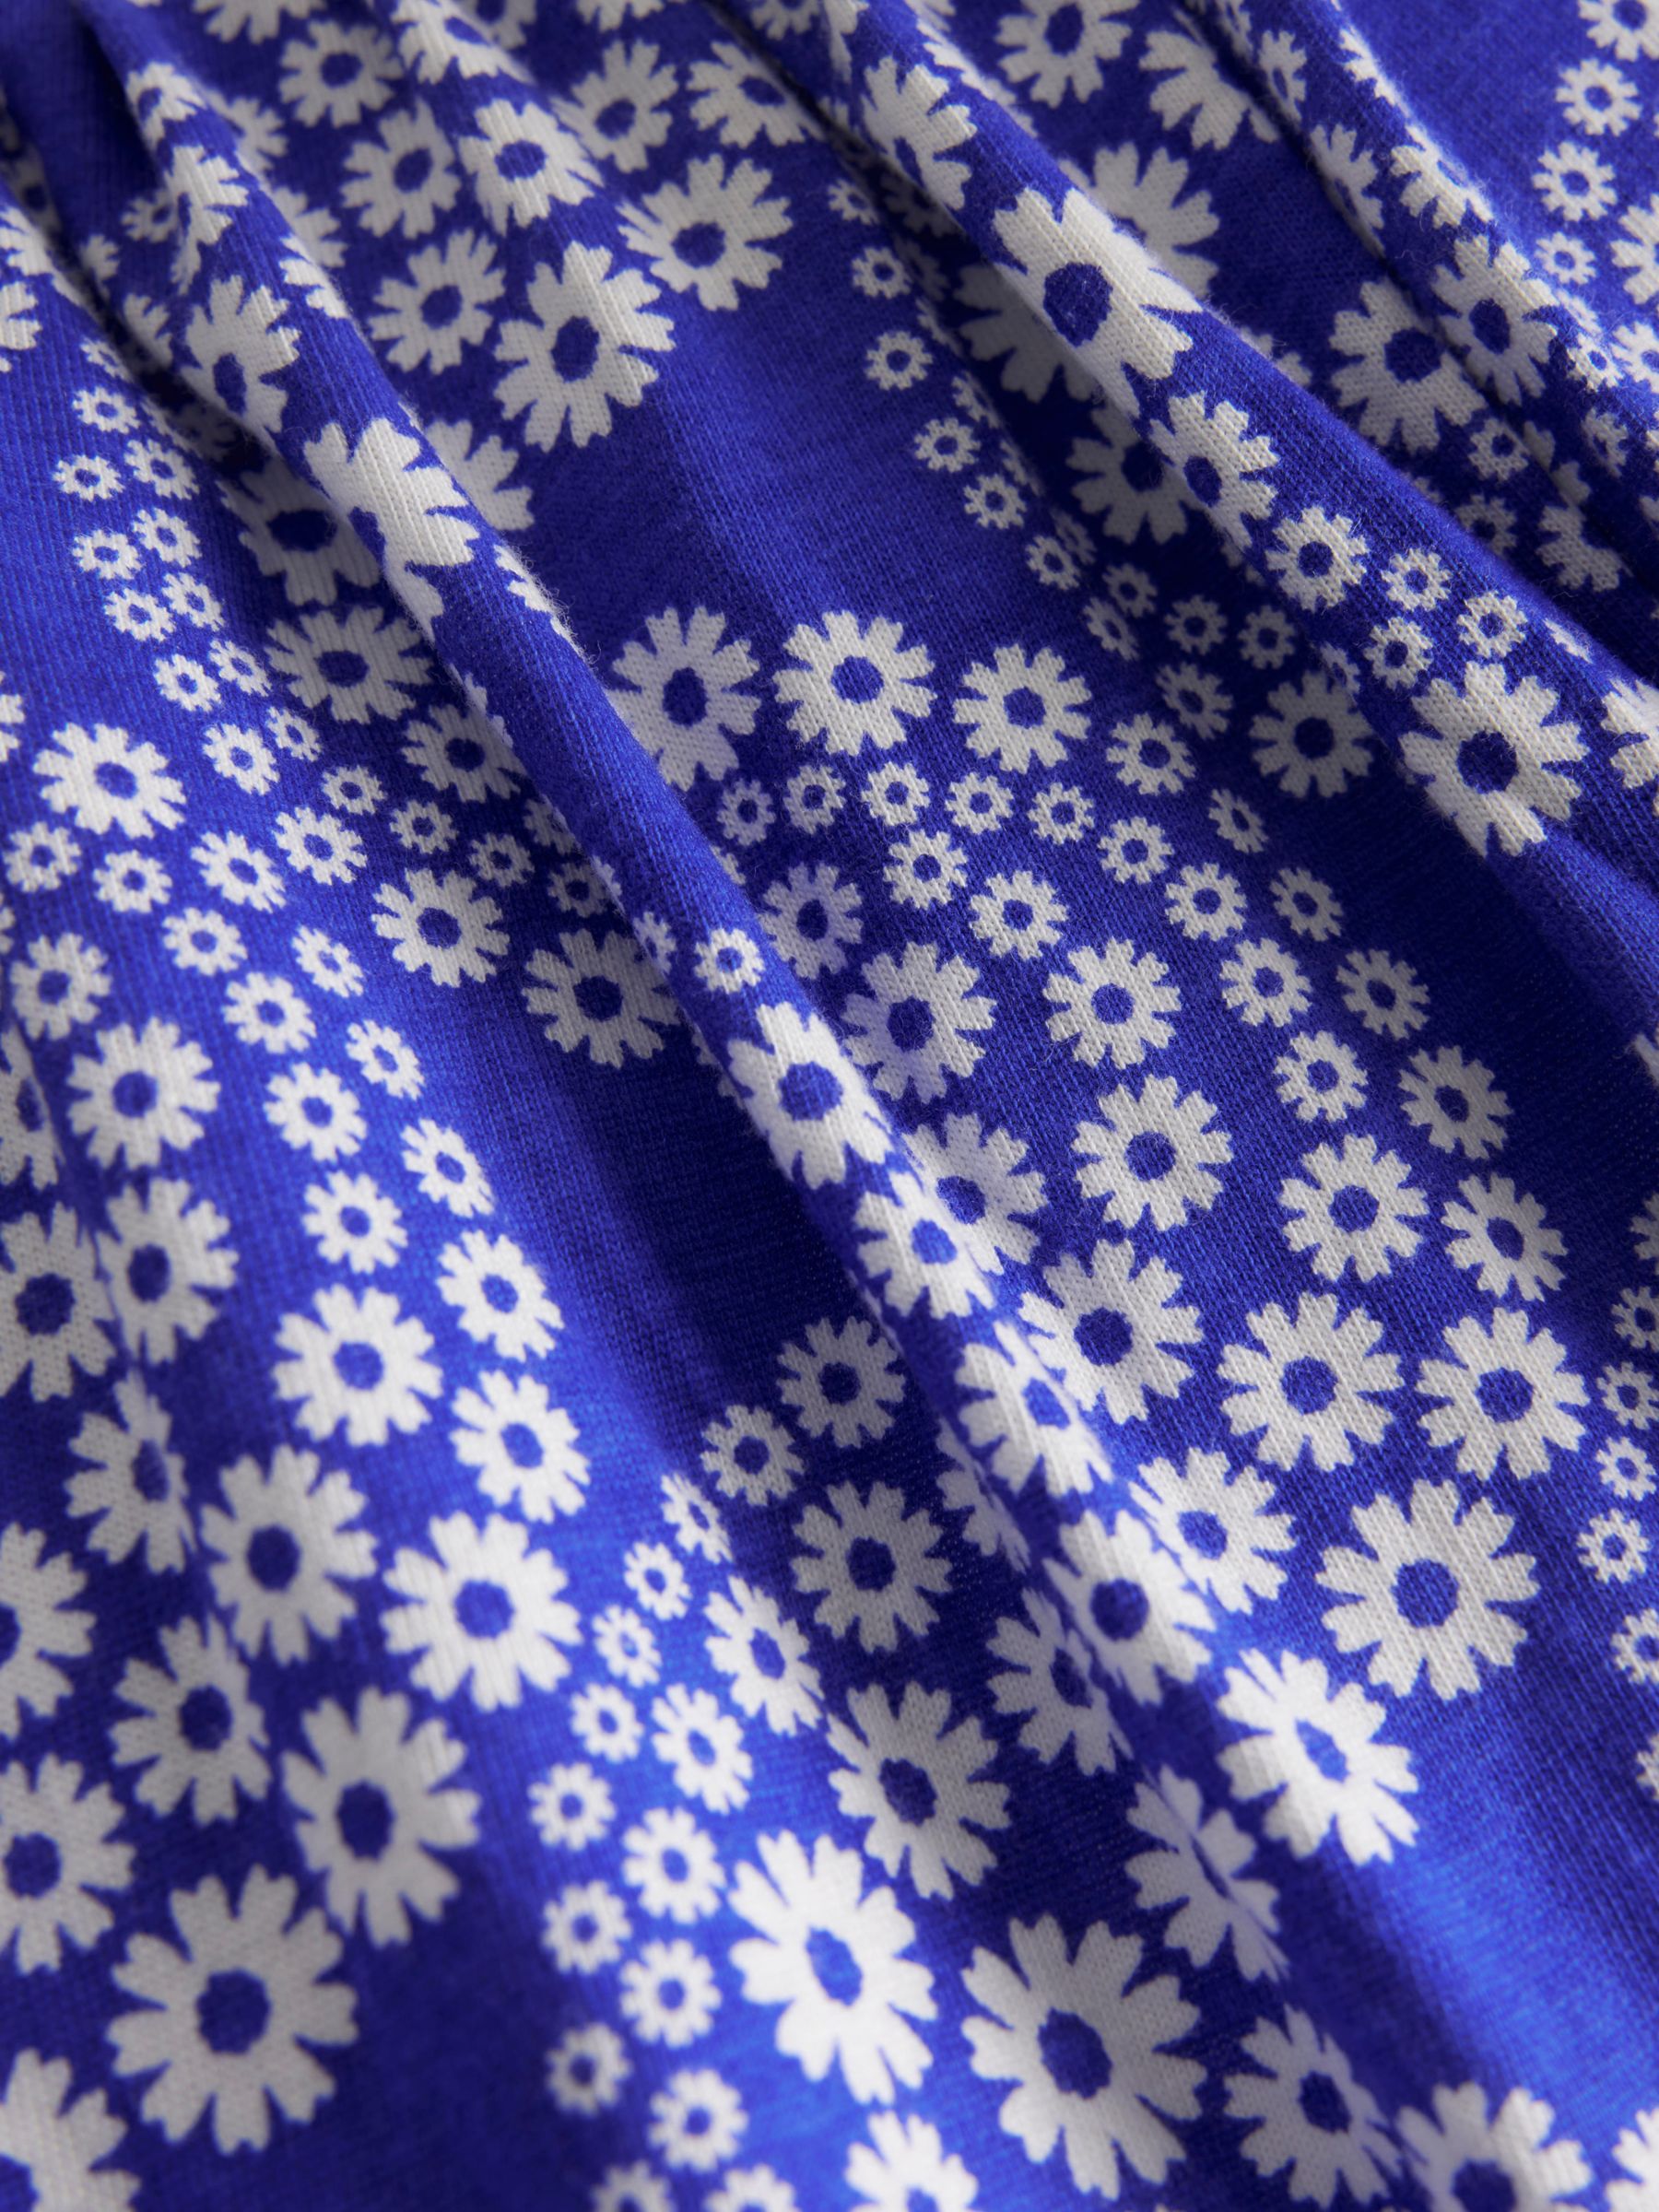 Mini Boden Kids' Floral Print Harem Jersey Trousers, Greek Blue Wave, 8Y